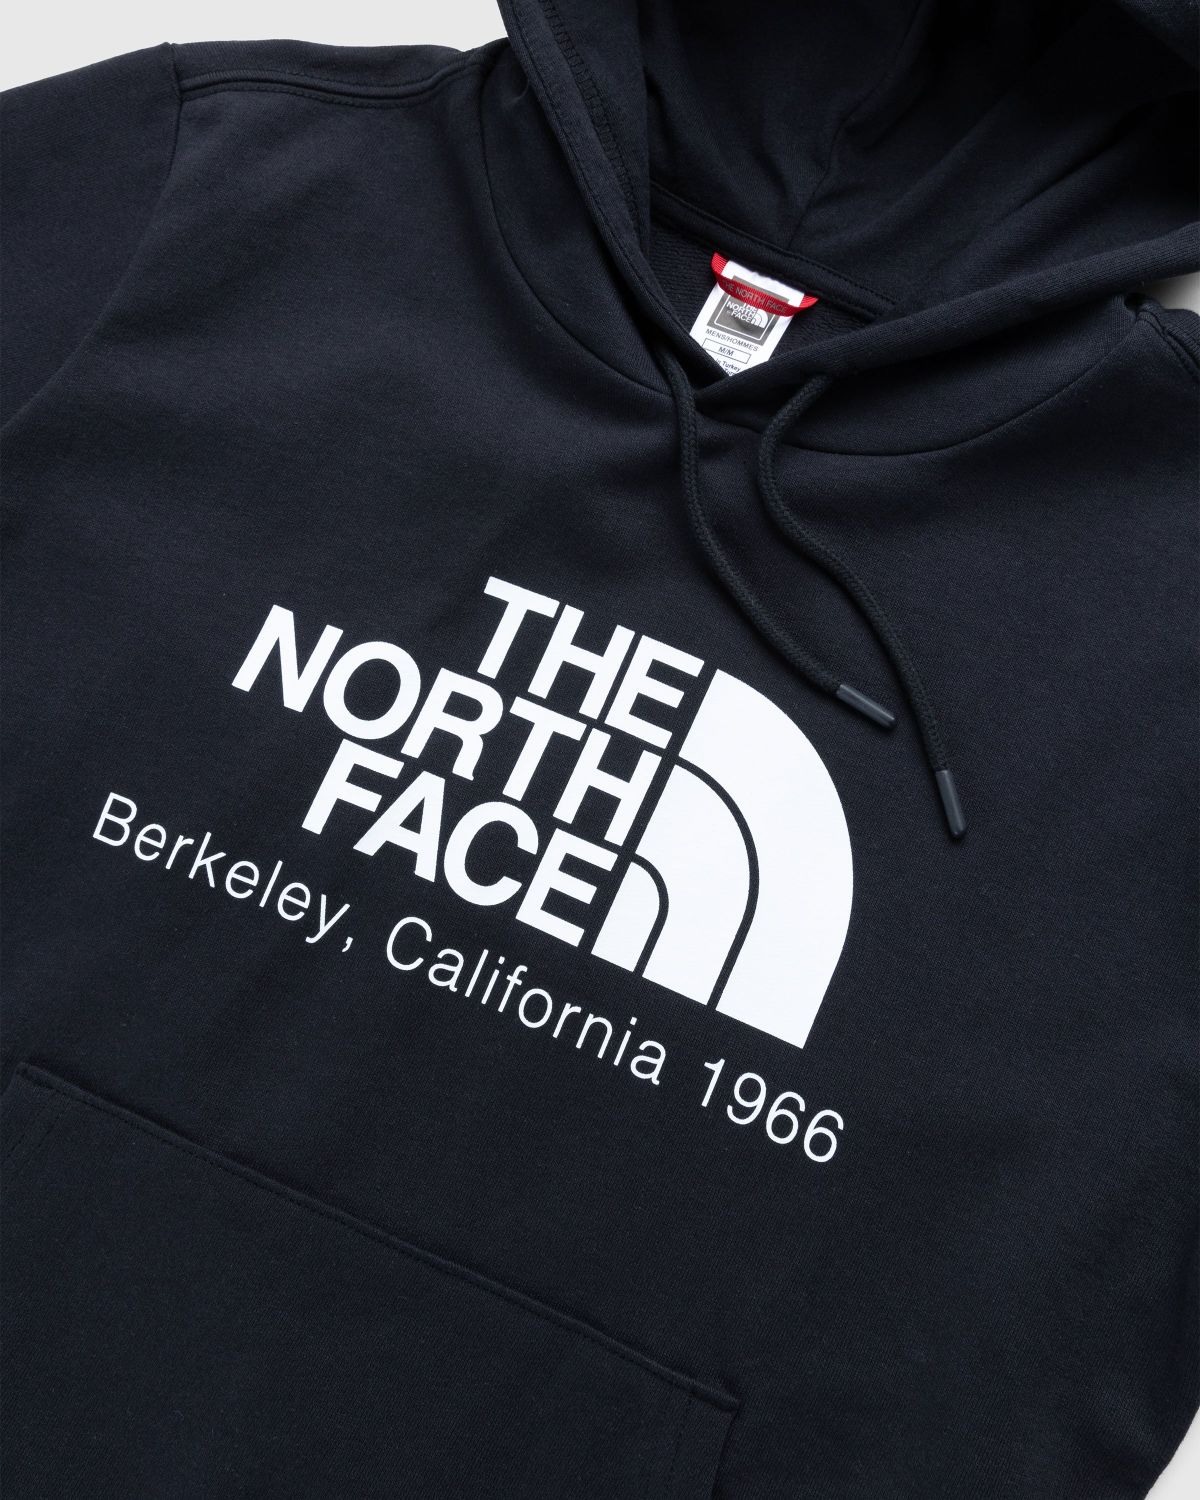 The North Face – Berkeley California Hoodie Black | Highsnobiety Shop